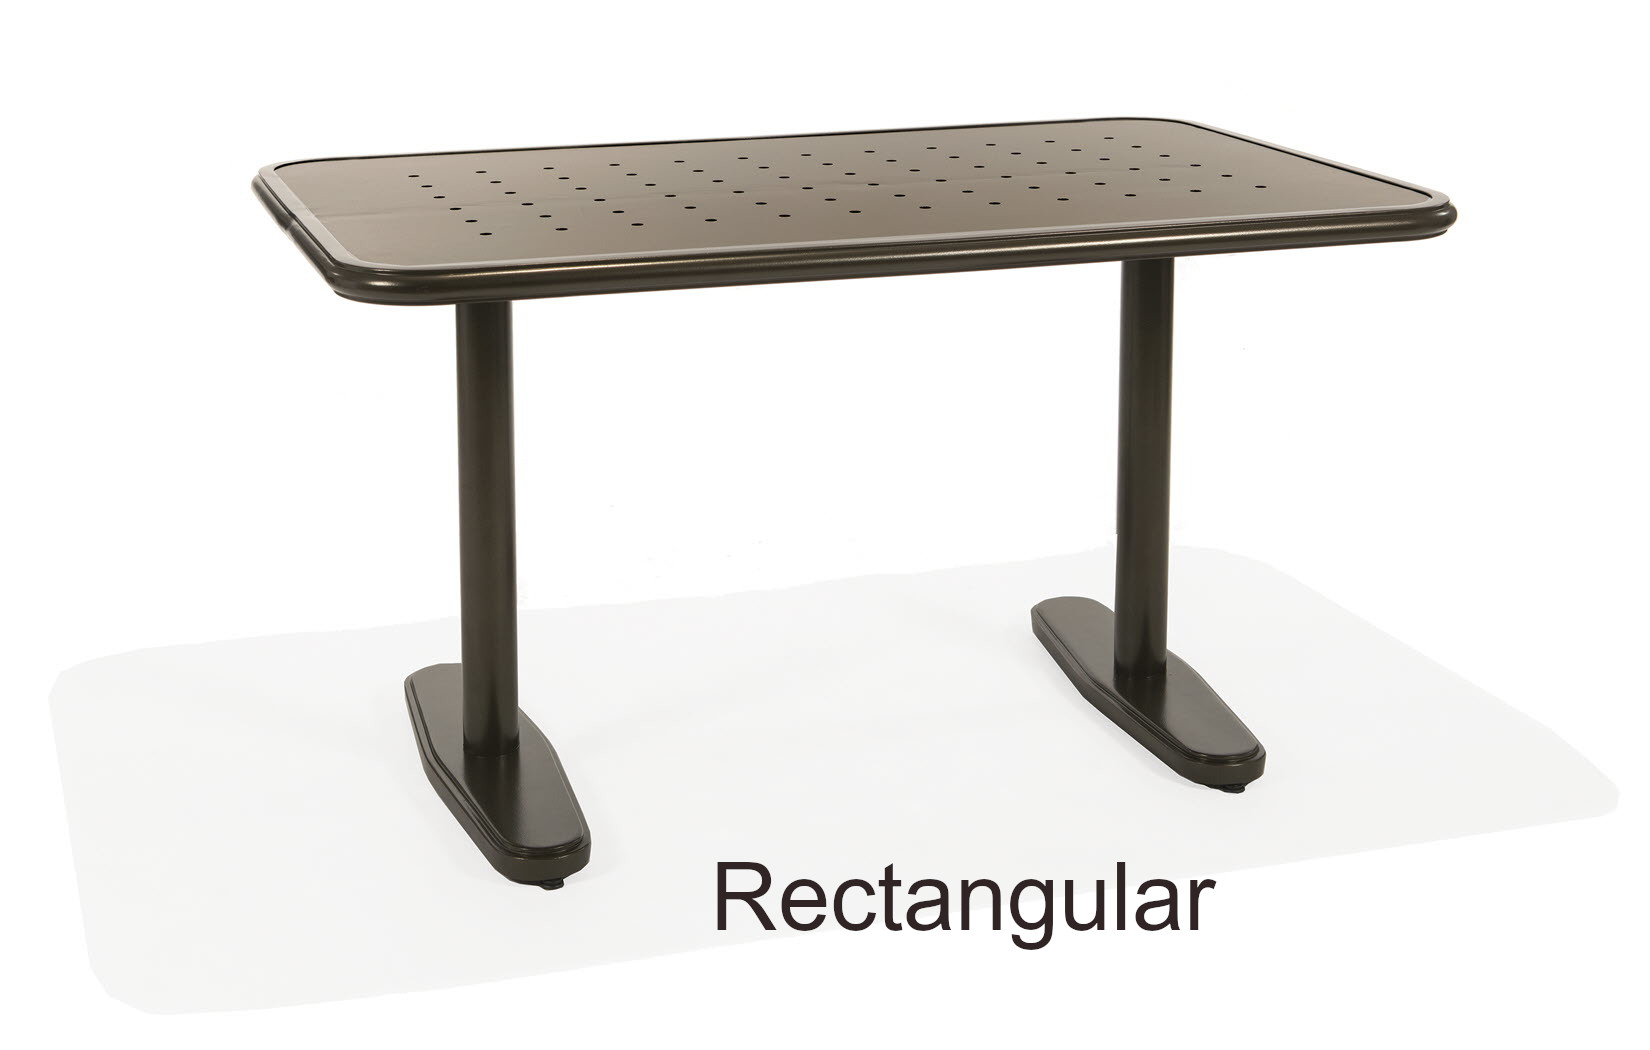 Stamped Aluminum Top Rectangular Pedestal Cafe Table